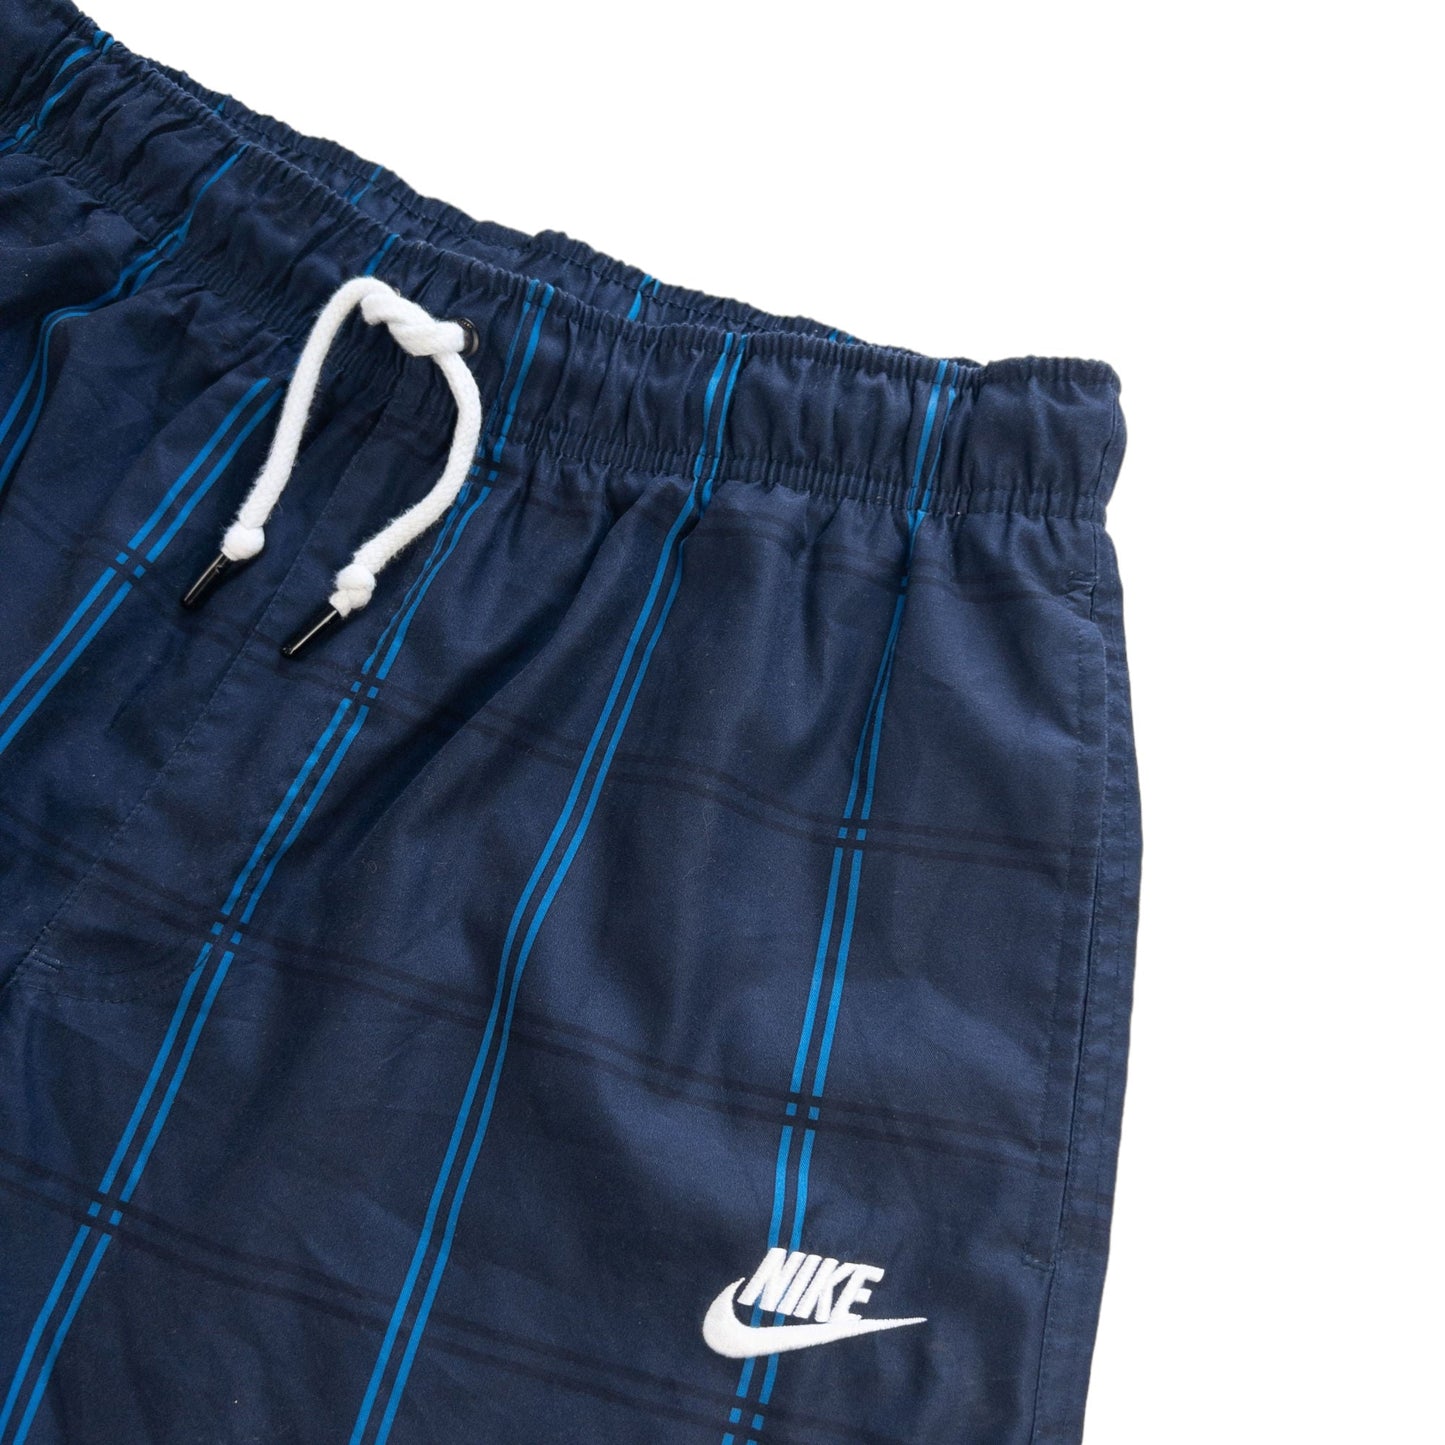 Vintage Nike Check Shorts Size M